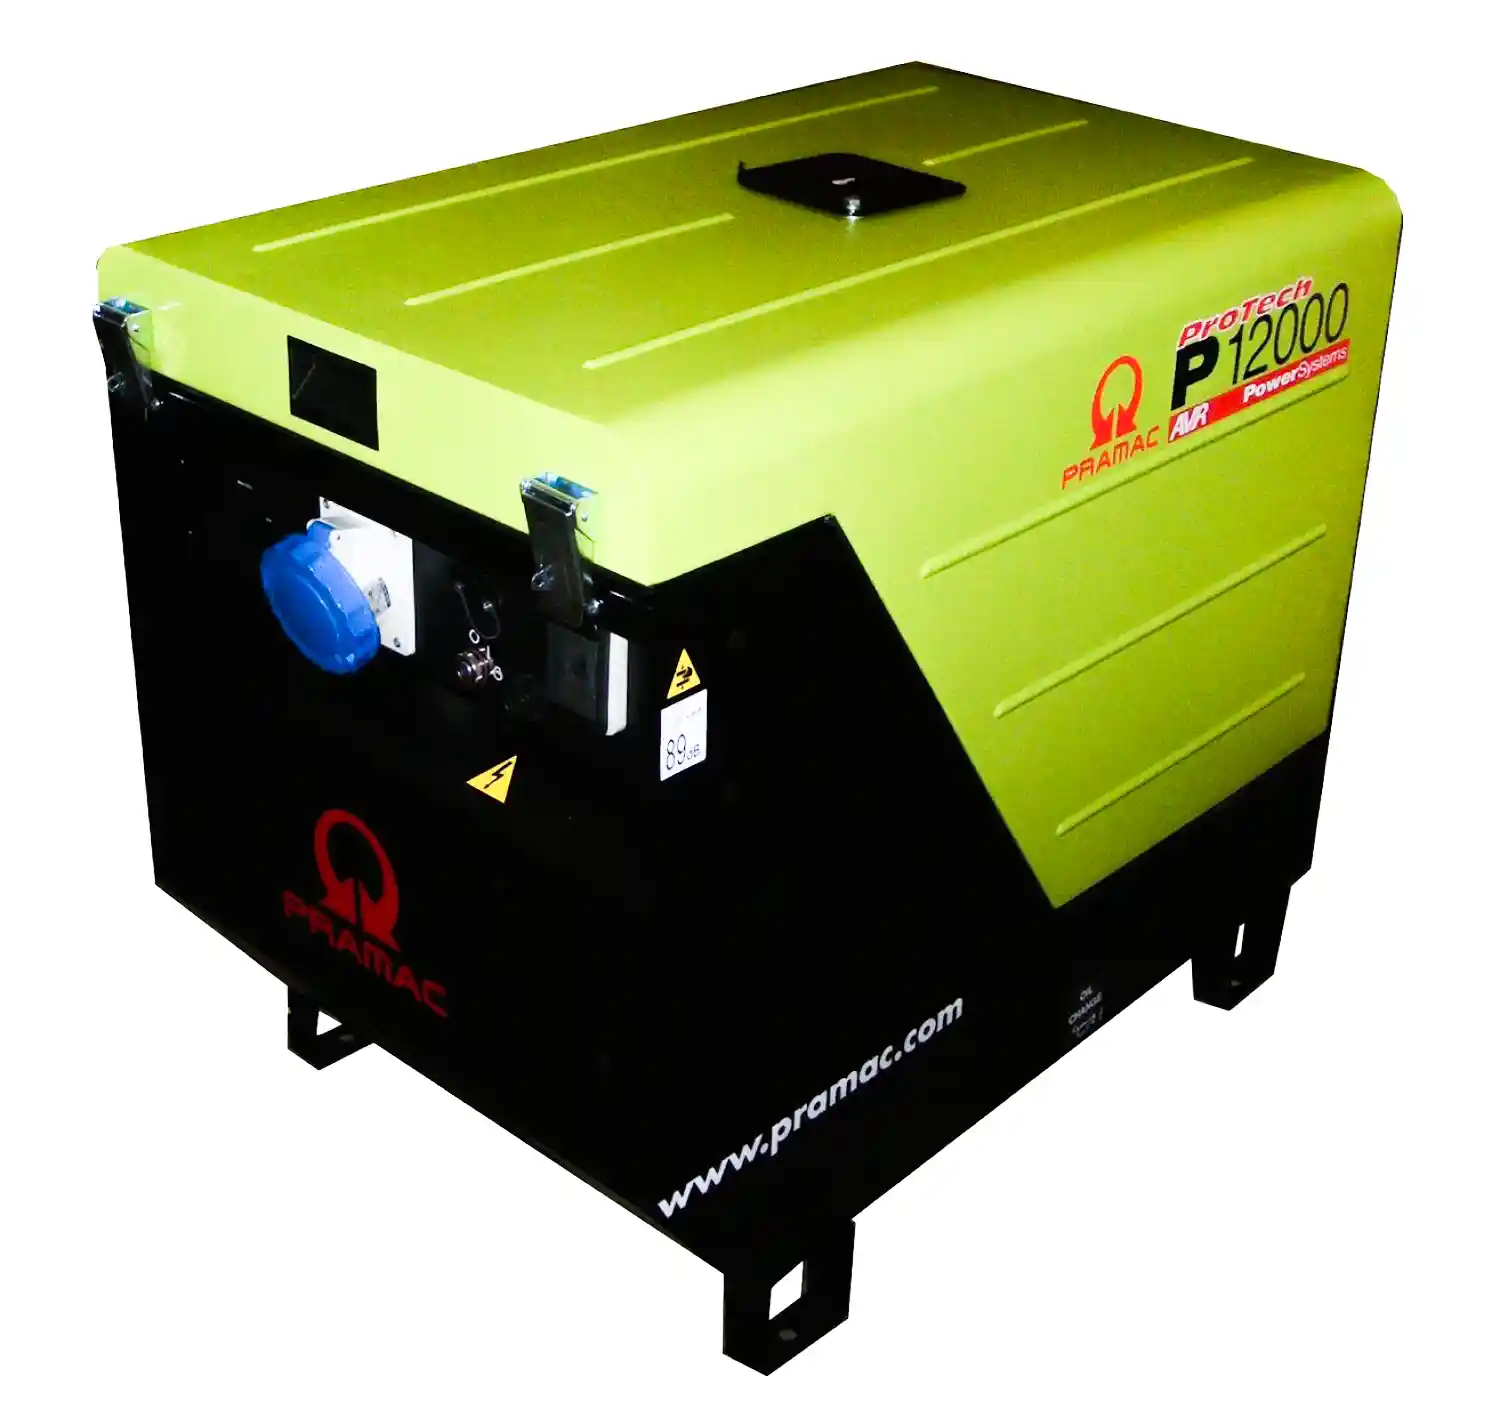 Pramac P12000 63A 230V AVR CONN 10kw Petrol Generator Electric Start